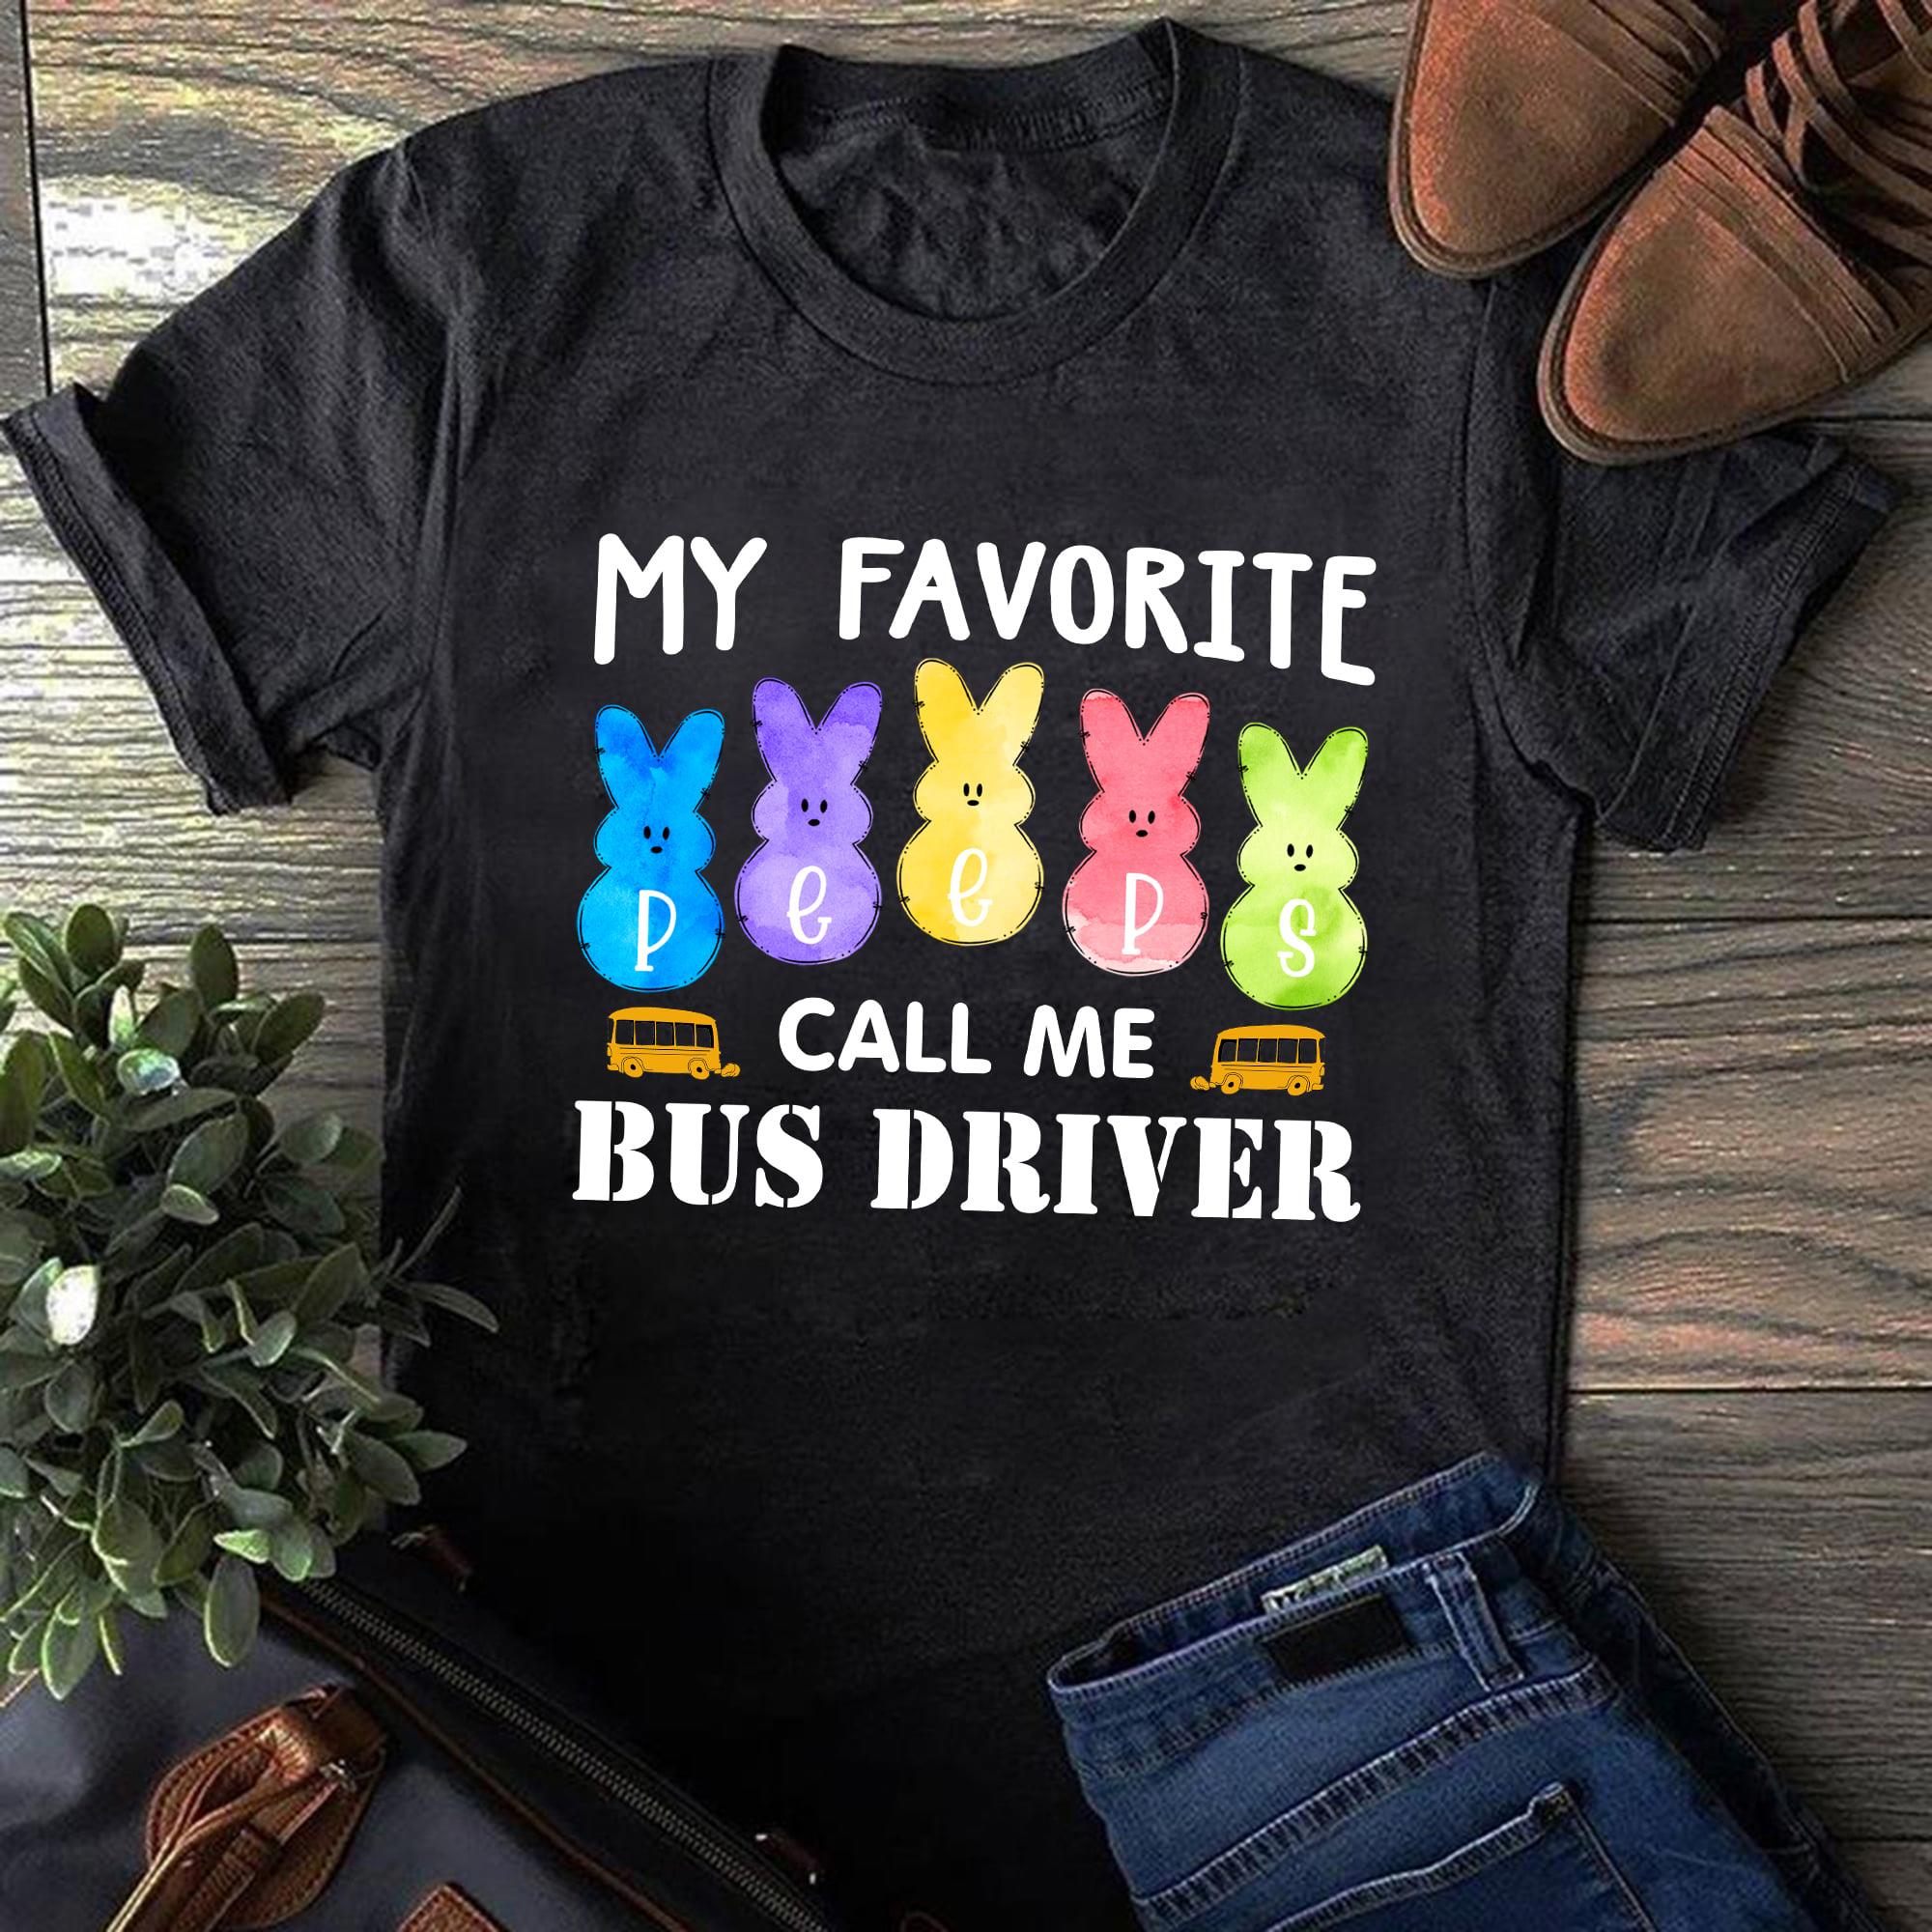 My Favorite Peeps Call Me Bus Driver Shirt